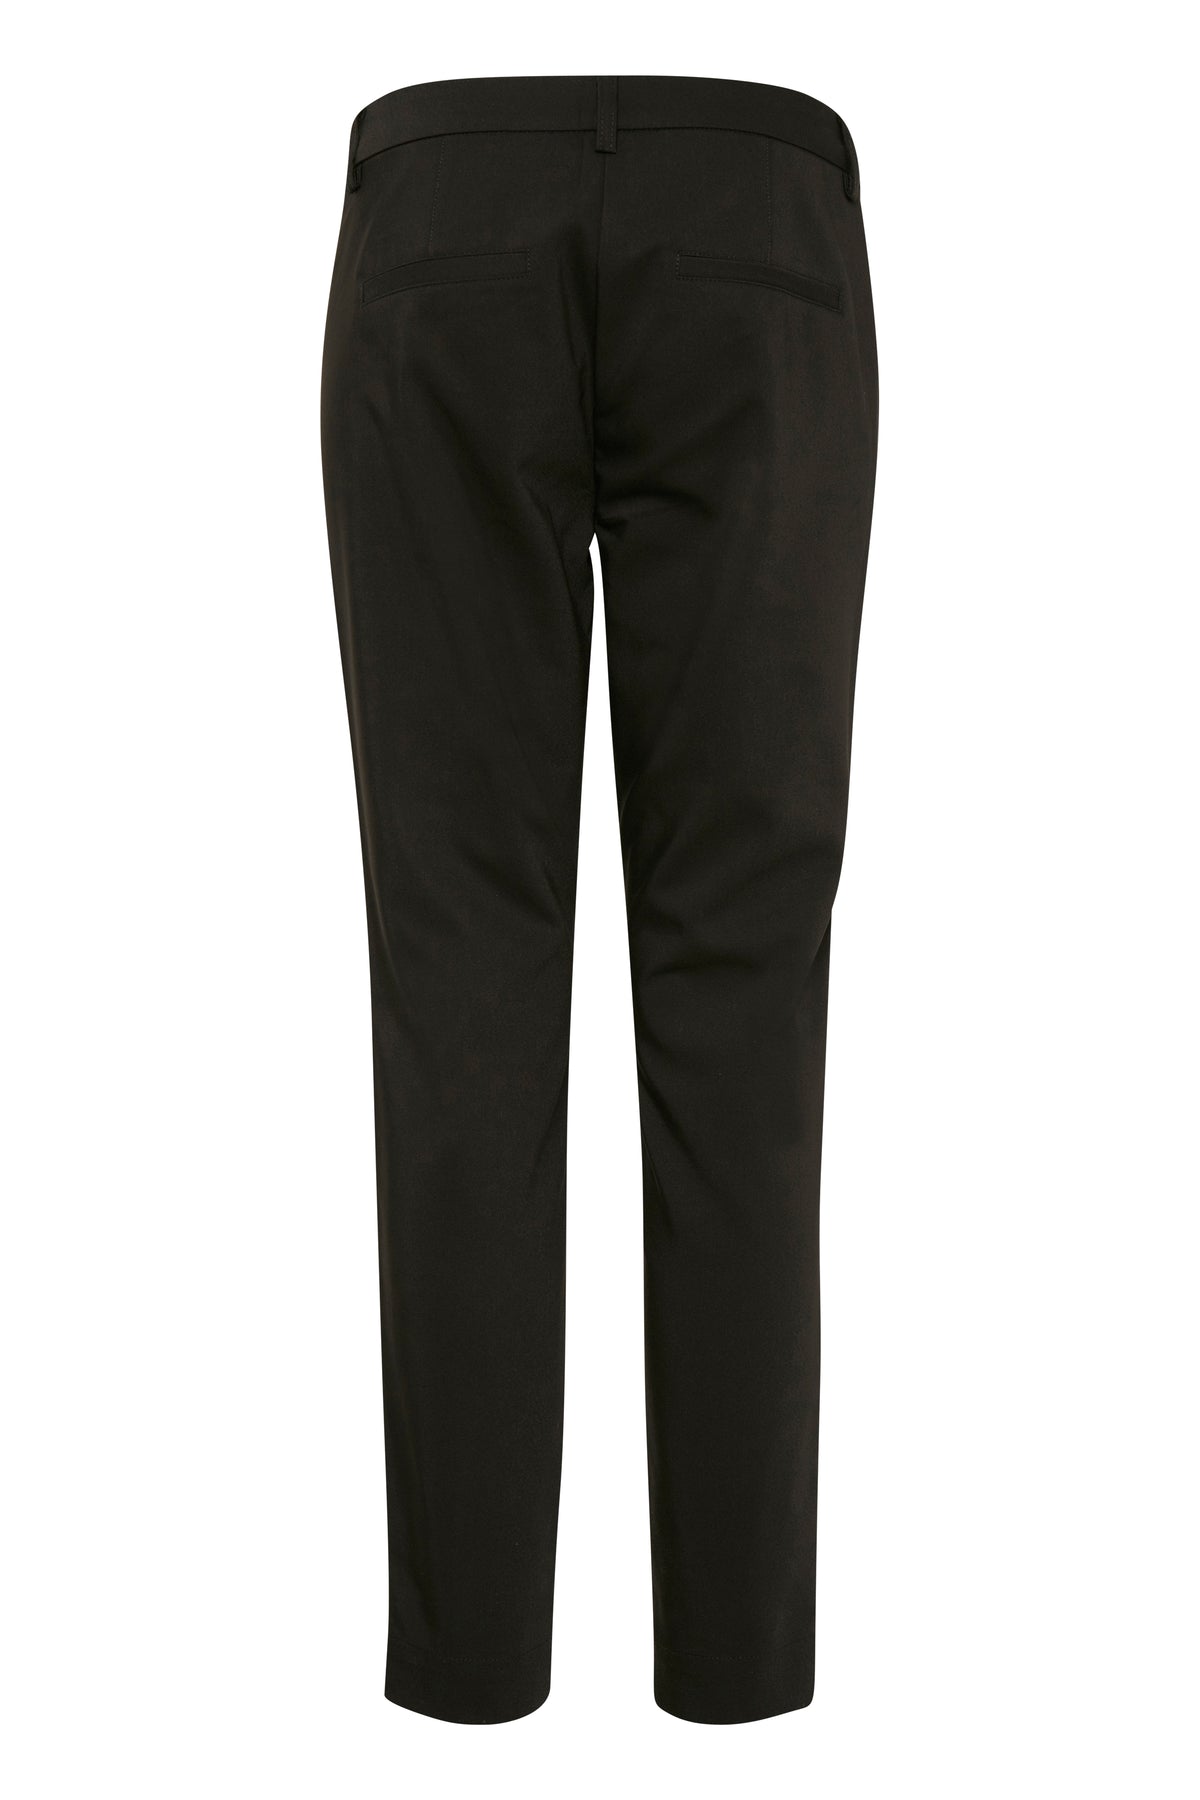 Fransa Zapant Black Cigarette Style Trousers, 20603400